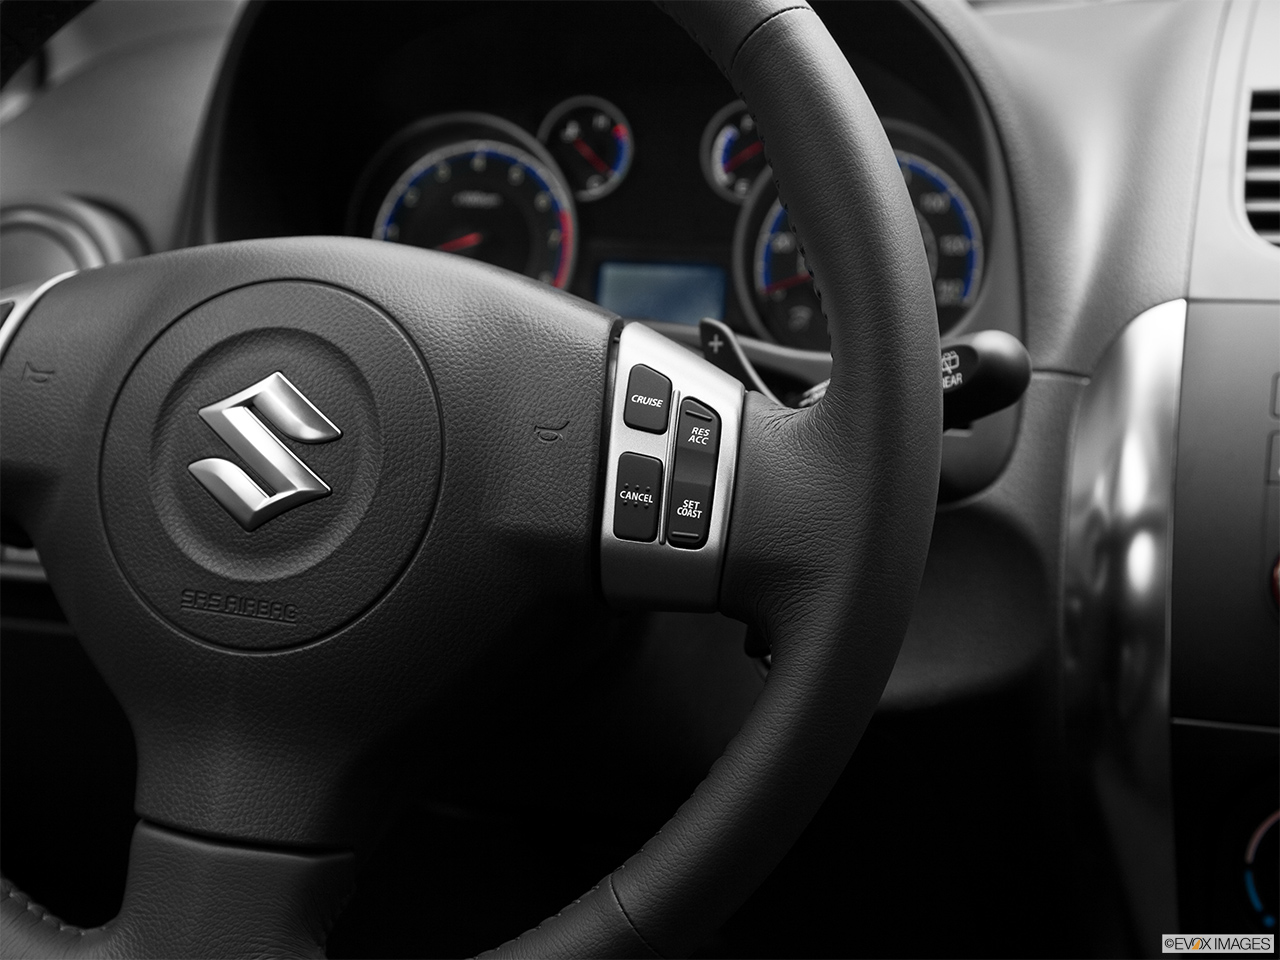 2011 Suzuki SX4 Sportback Technology Steering Wheel Controls (Right Side) 